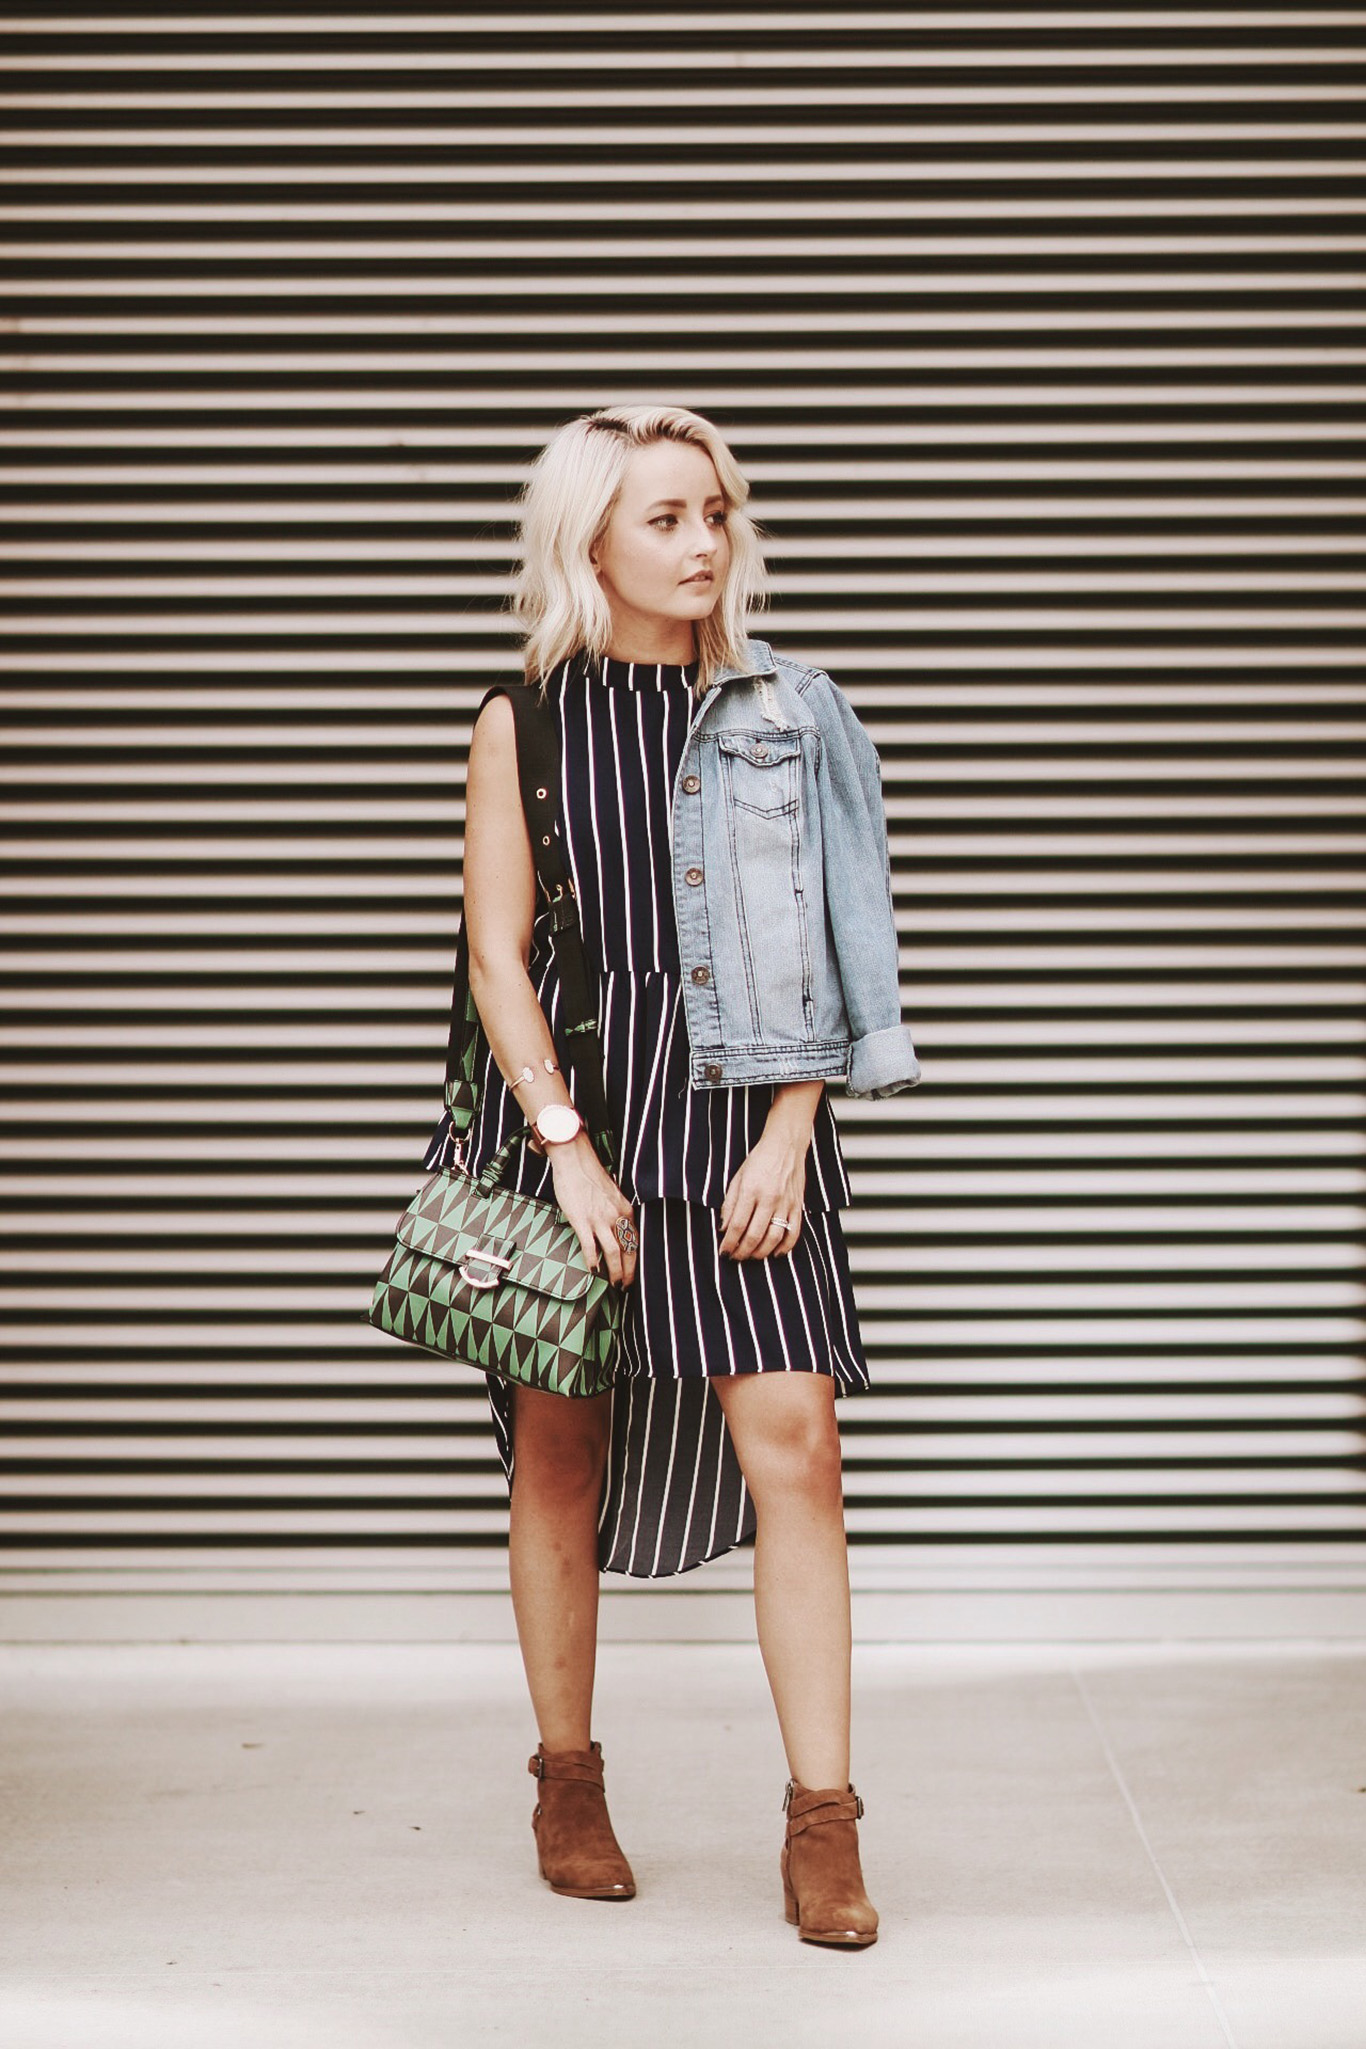 Alena Gidenko of modaprints.com shares tips of styling a striped ModCloth dress for Fall